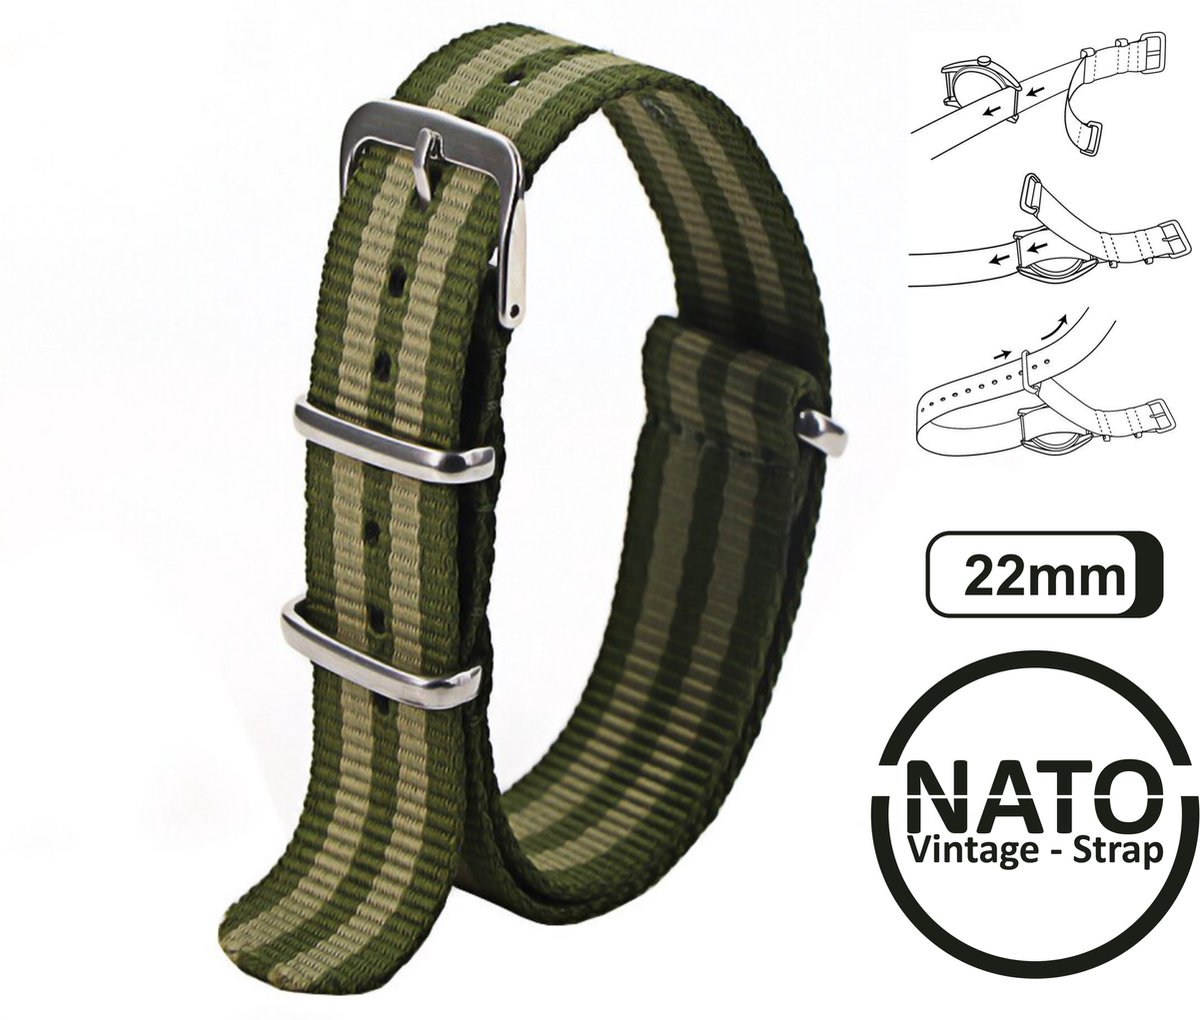 22mm Nato Strap Army Groen - Vintage James Bond - Nato Strap collectie - Mannen - Horlogebanden - 22 mm bandbreedte voor oa. Seiko Rolex Omega Casio en Citizen